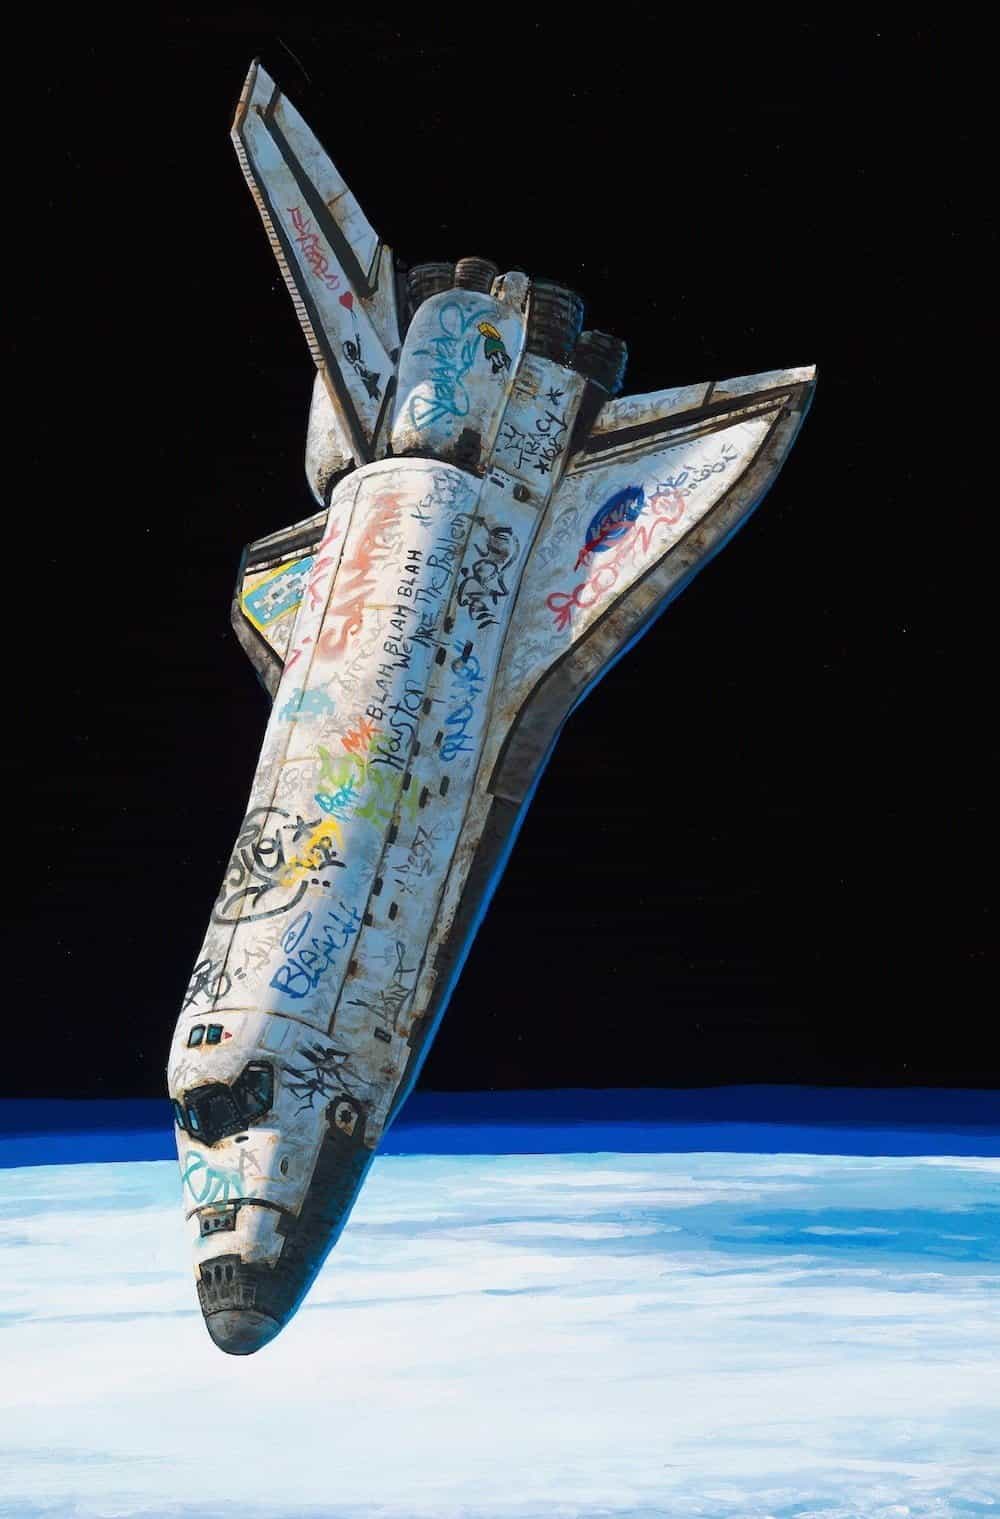 space shuttle met graffiti